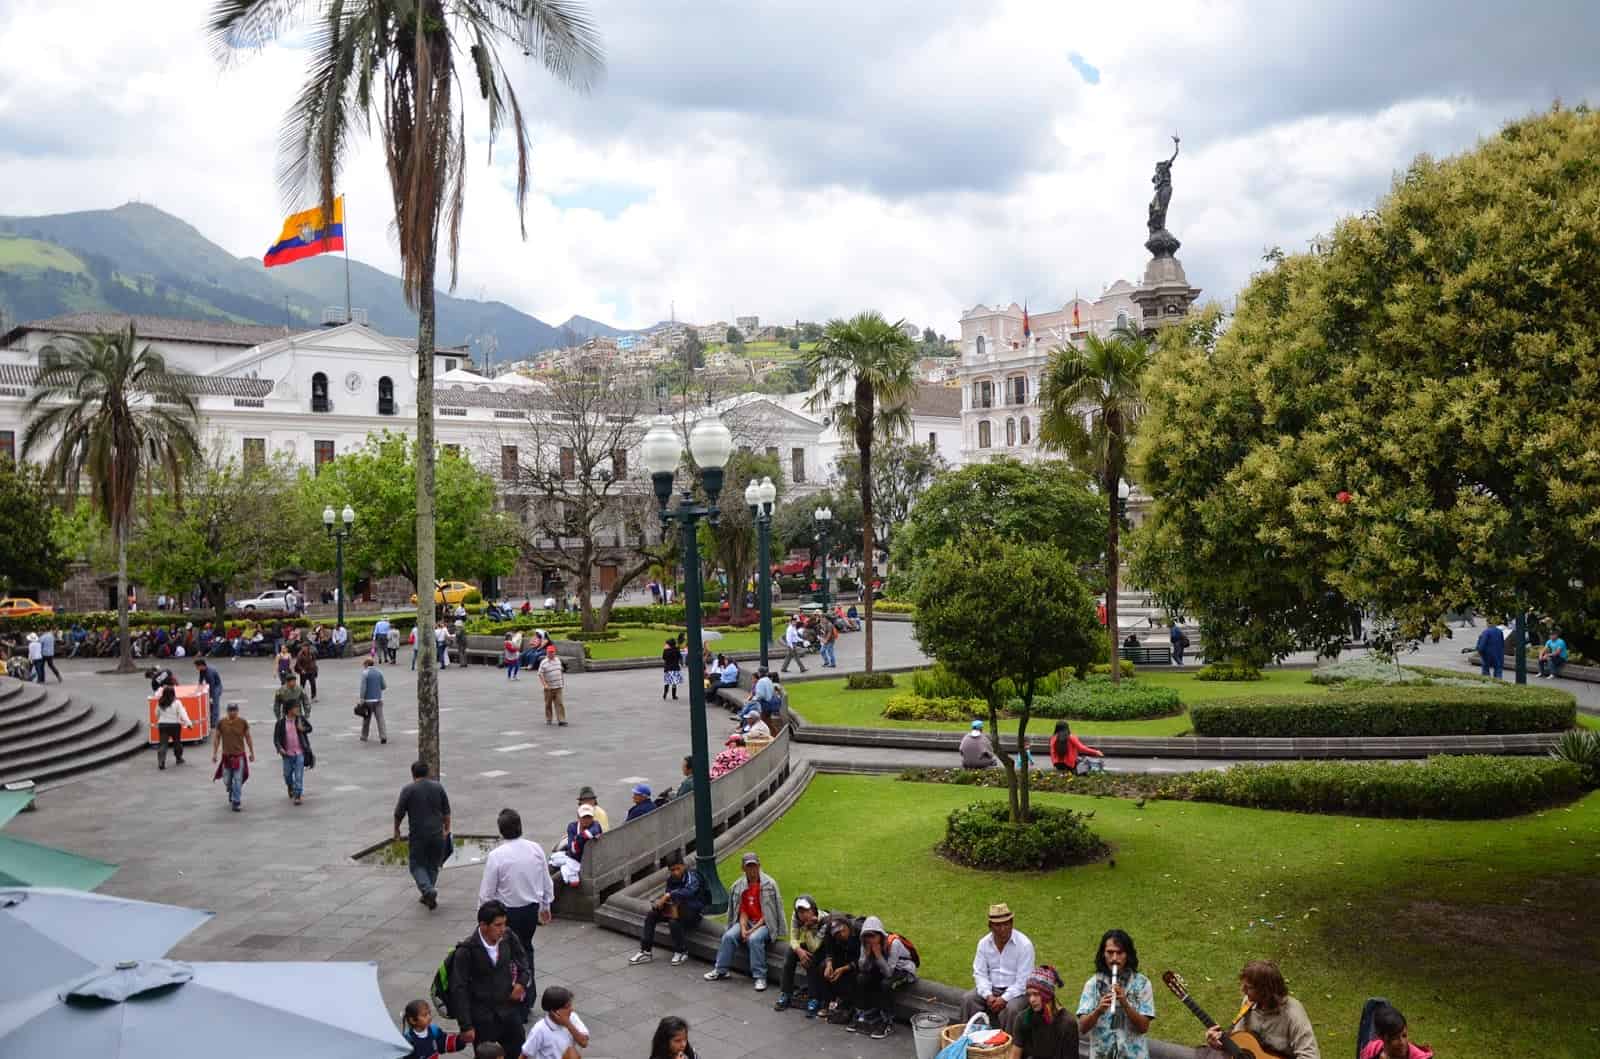 Plaza Grande in Quito, Ecuador